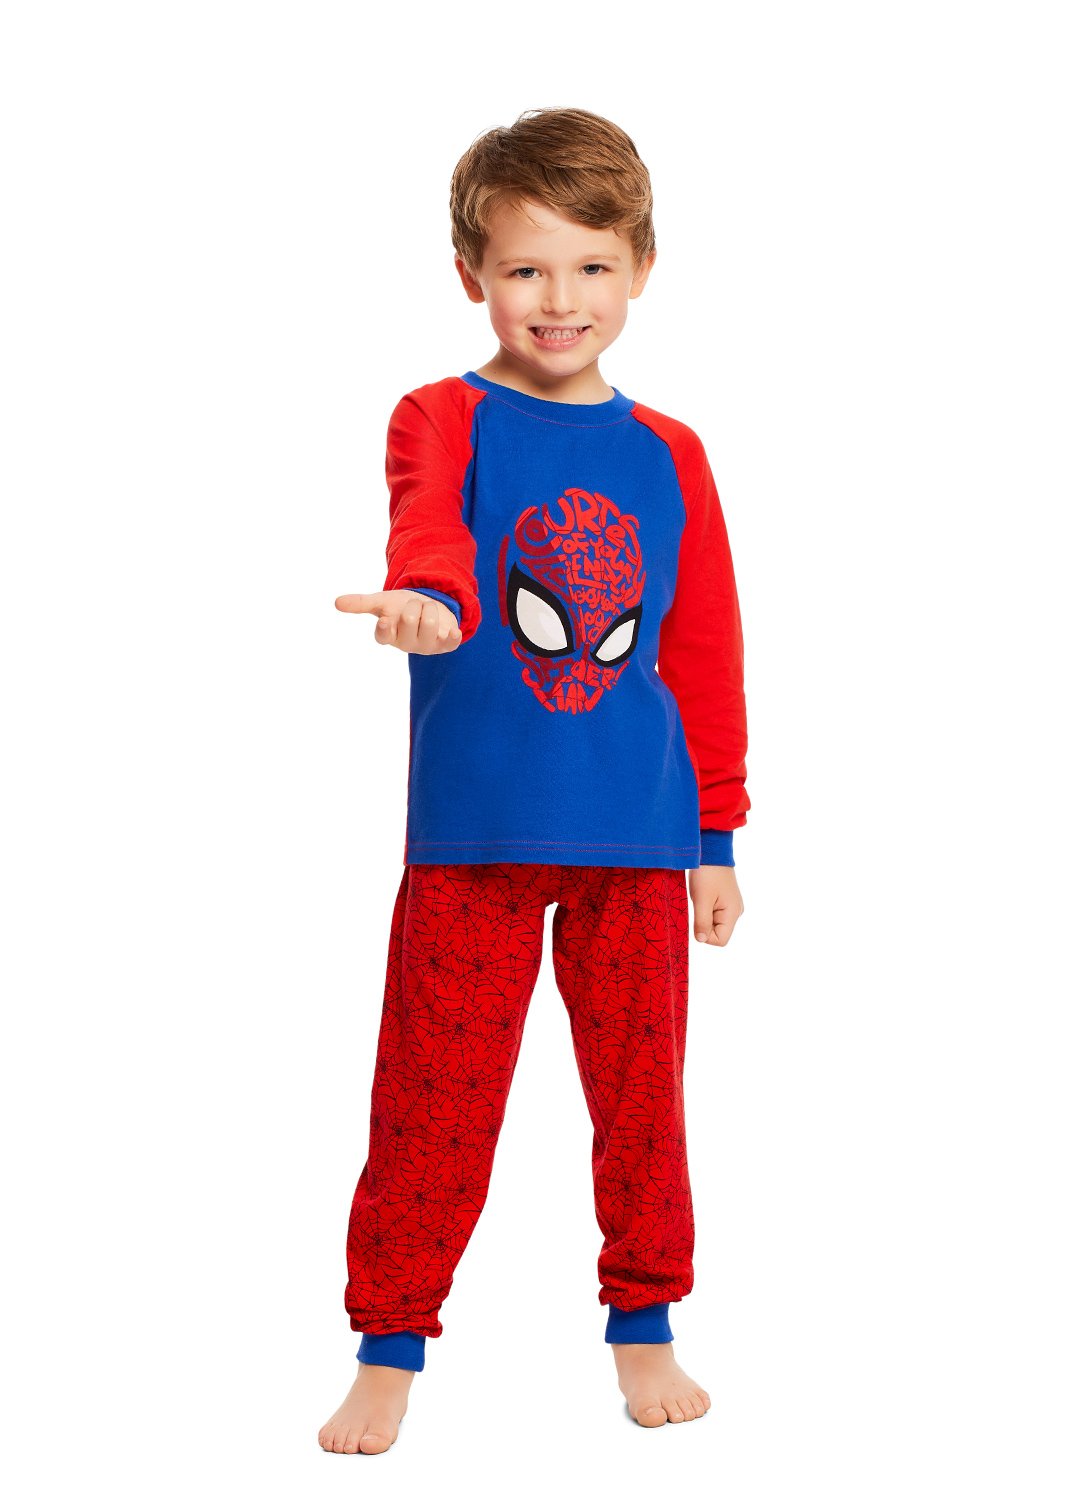 Kid wearing Spider-Man Pajama 2 pieces